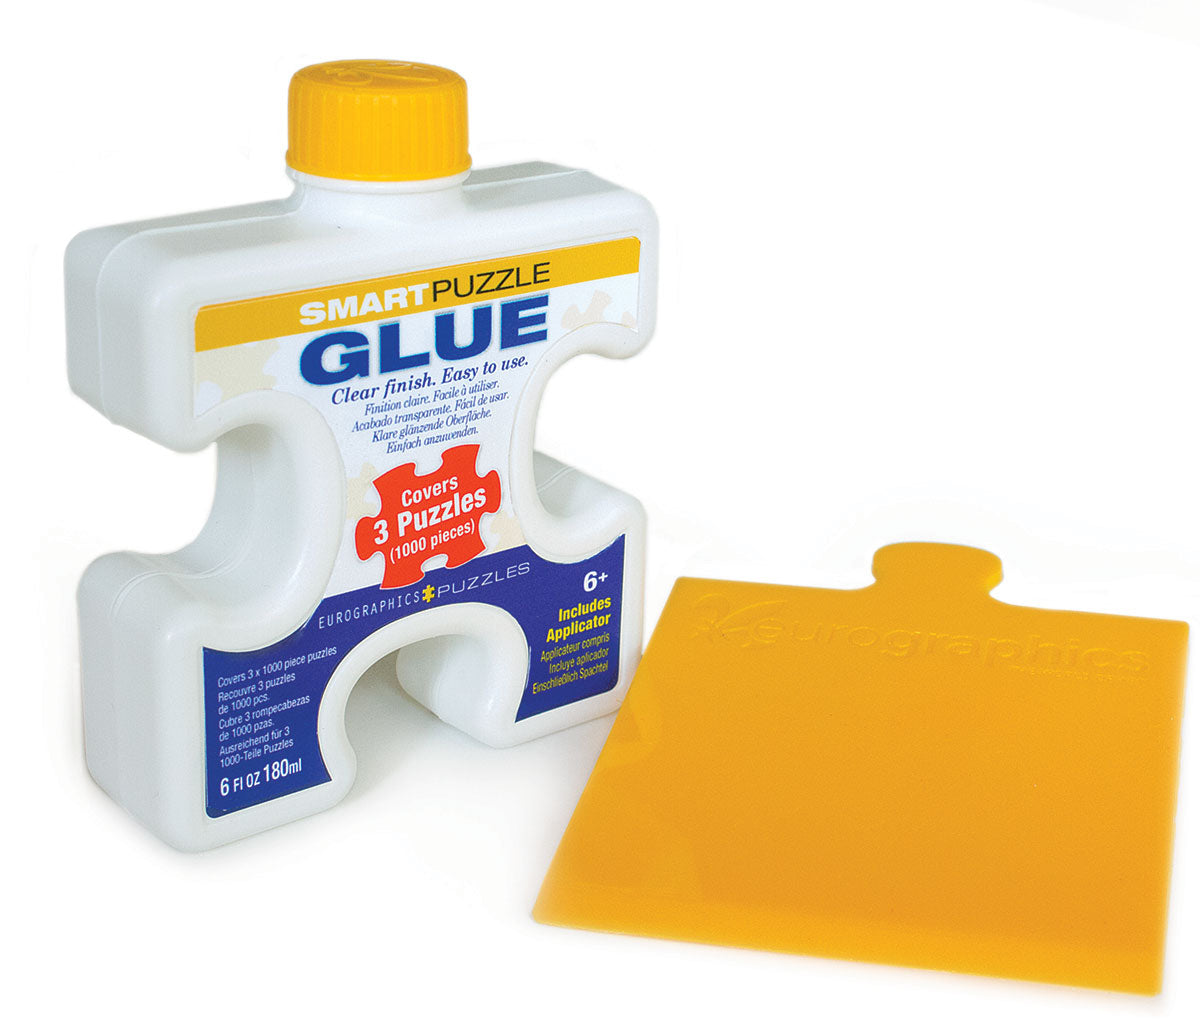 Smart Puzzle Glue - Quick Ship - Puzzlicious.com